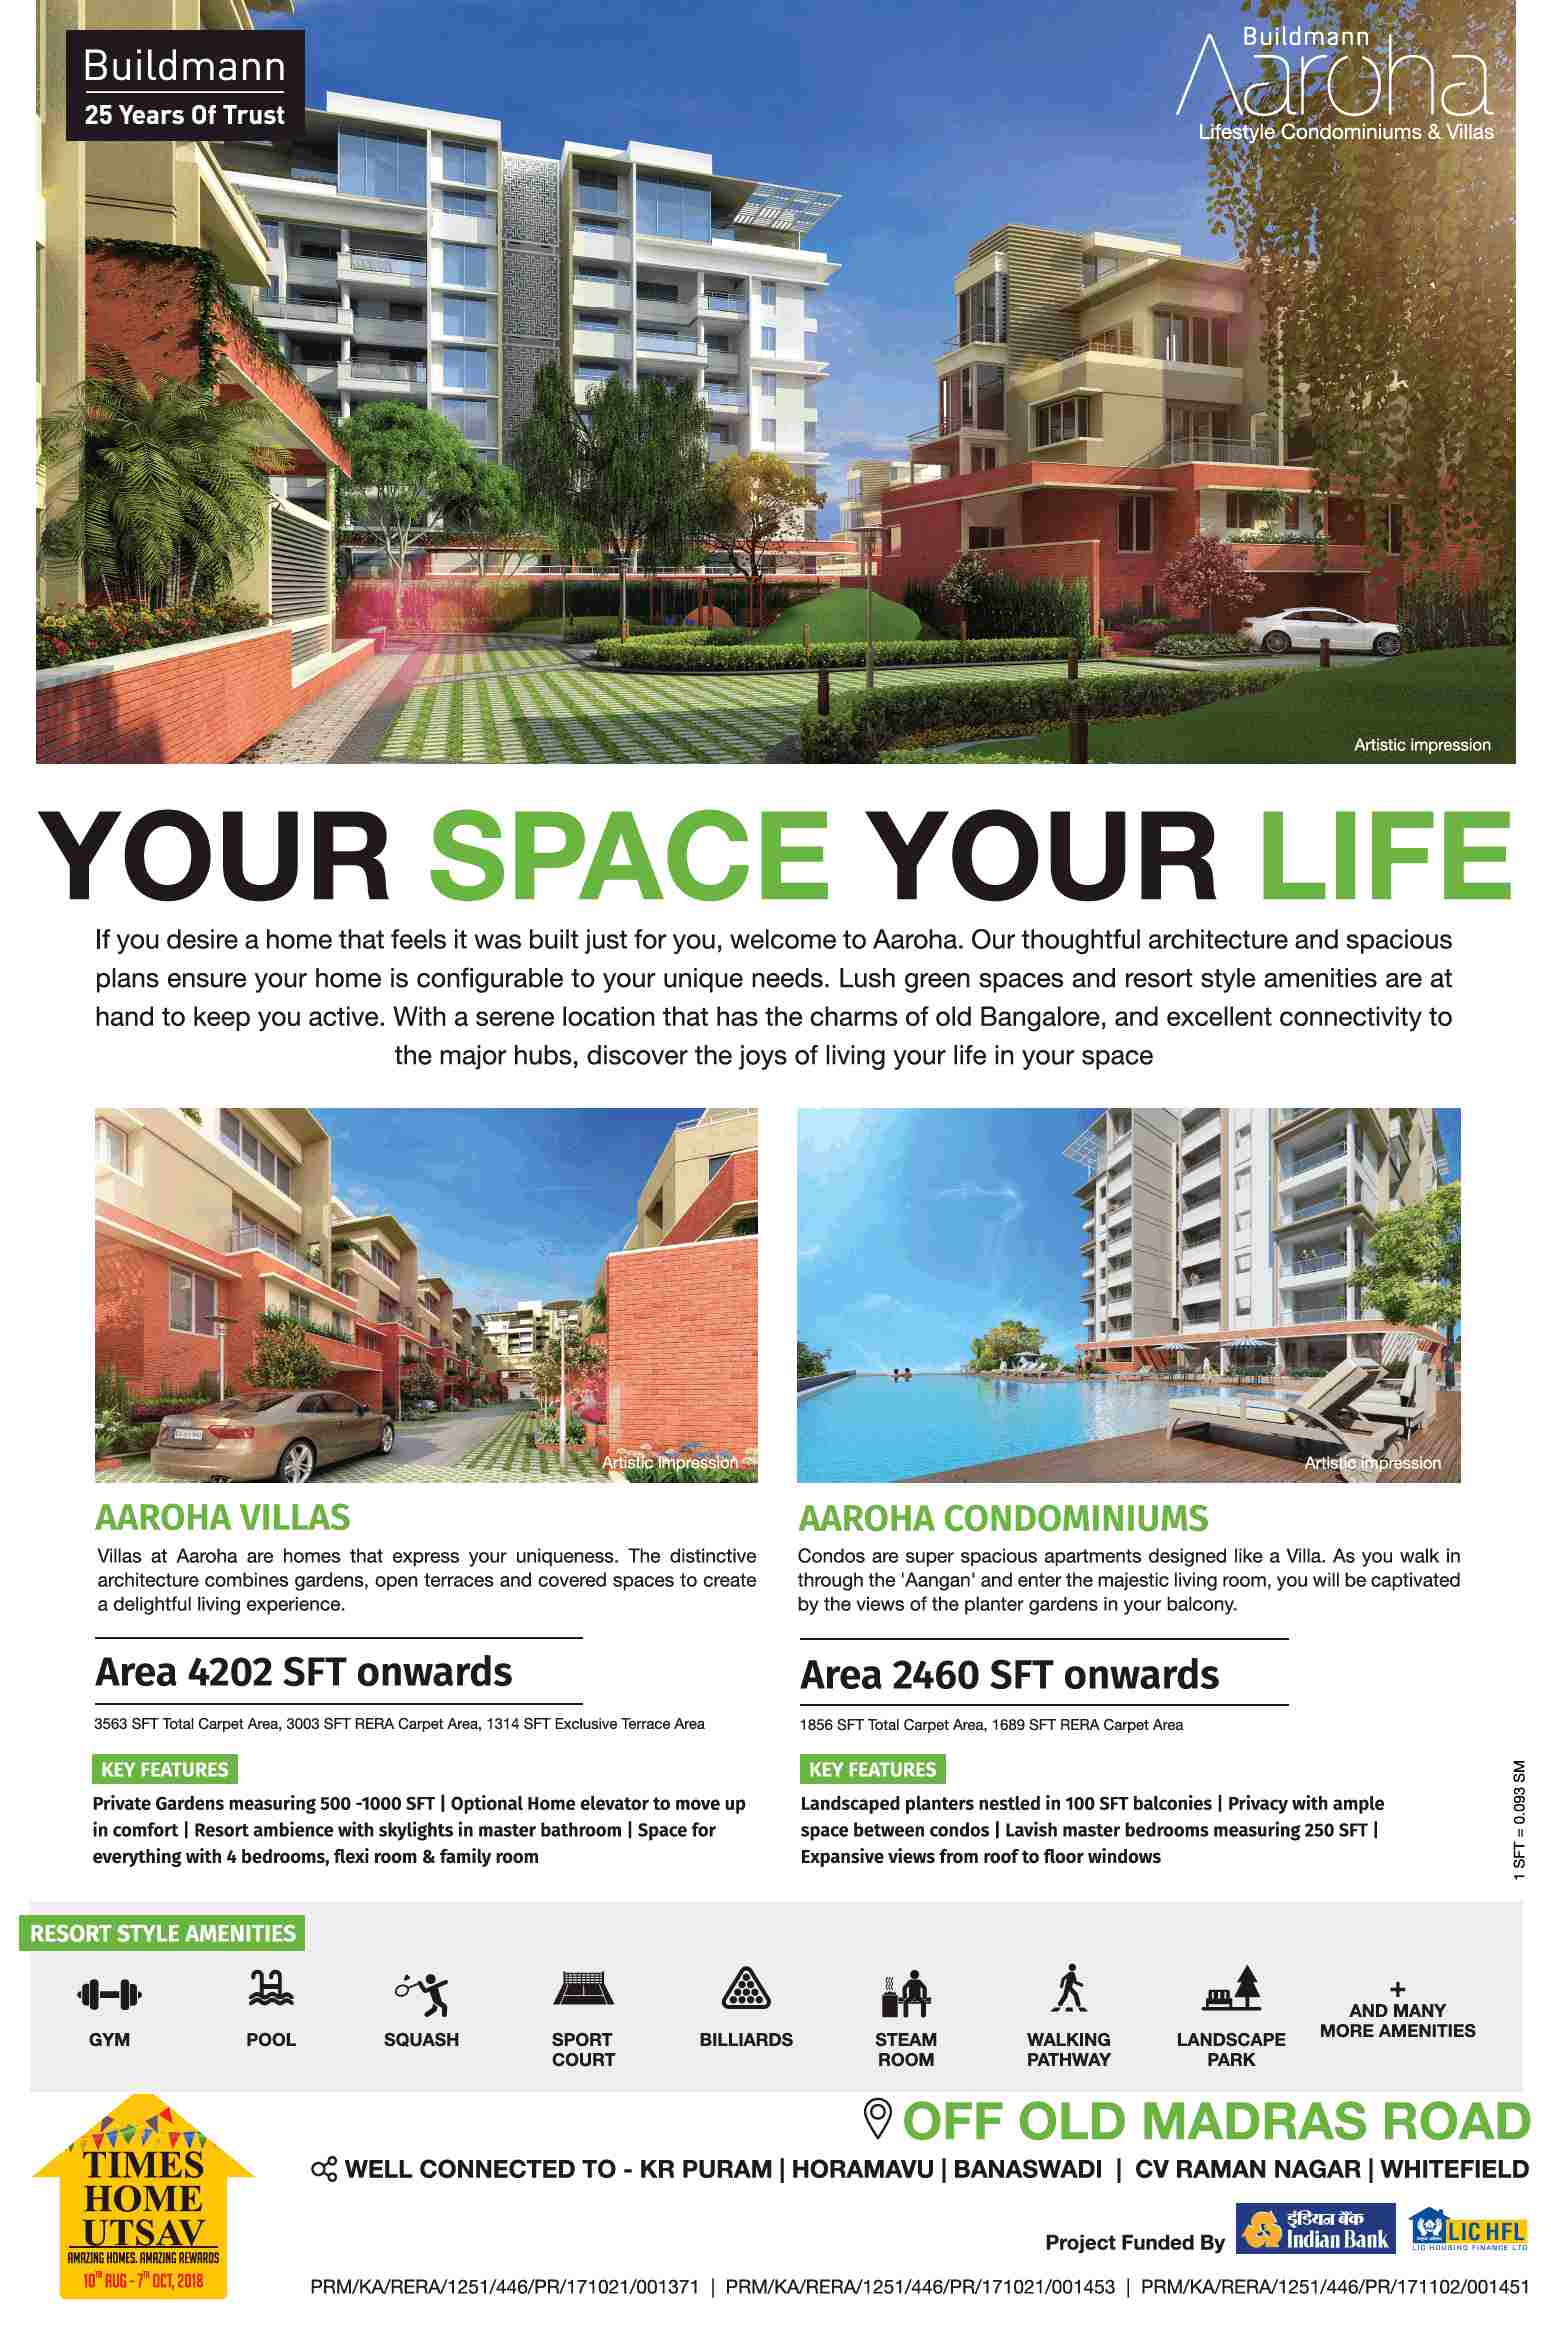 Enjoy the lush green spaces & resort style amenities at Buildmann Aaroha in Bangalore Update